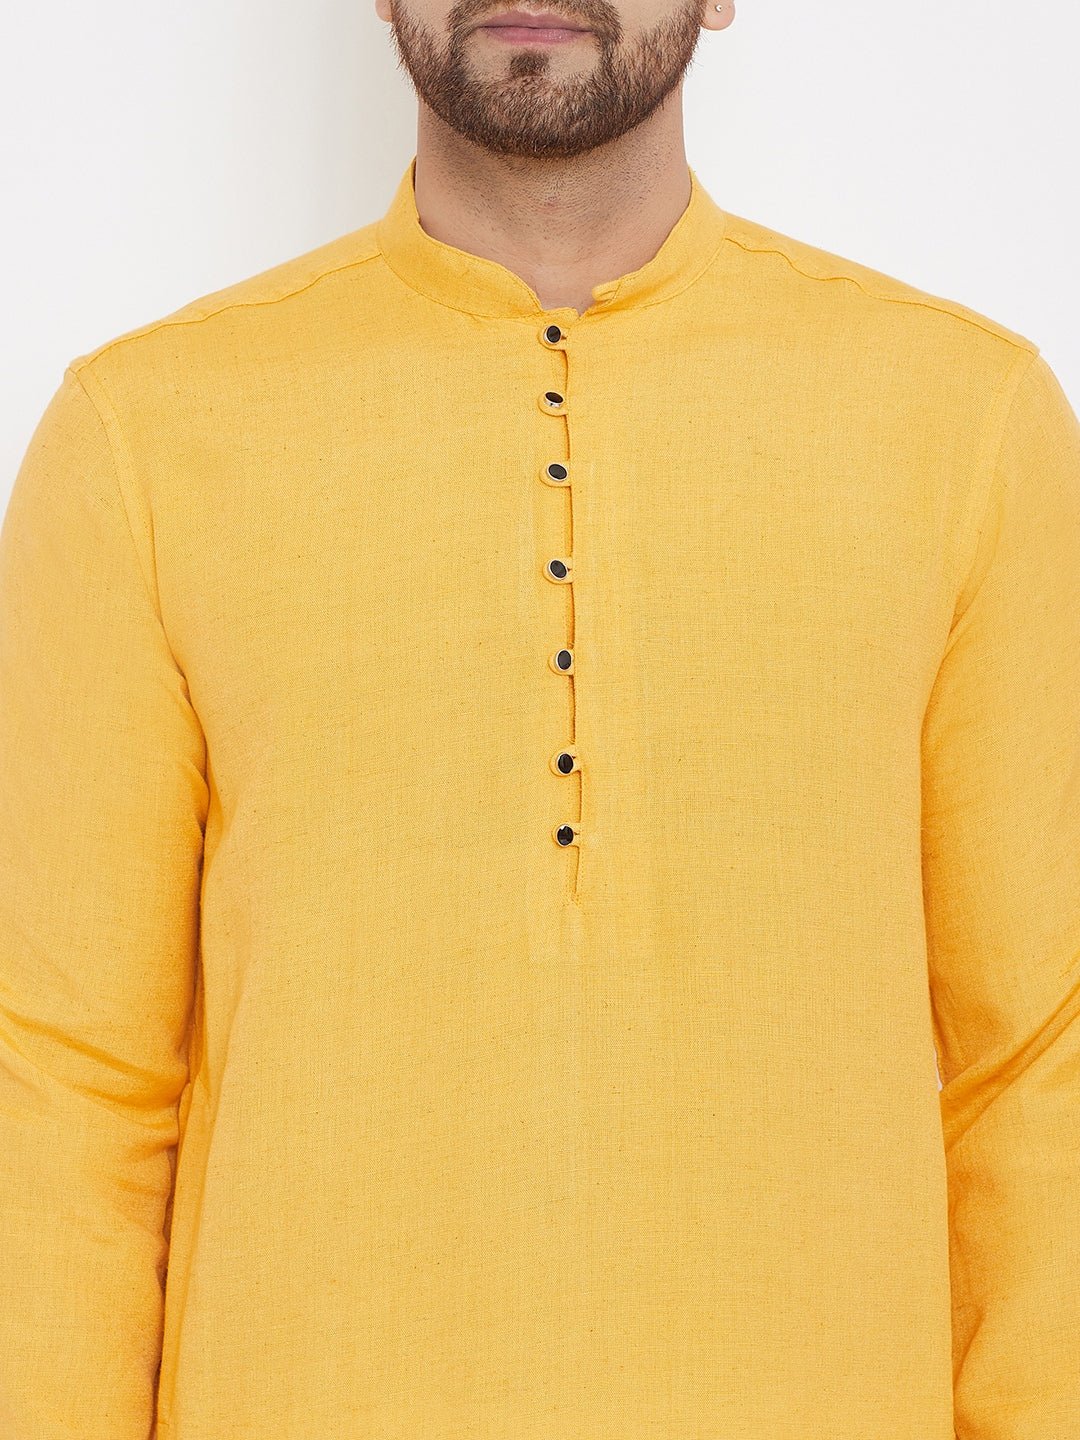 Men's Solid Yellow Placket Detail Cotton Kurta - Even Apparels